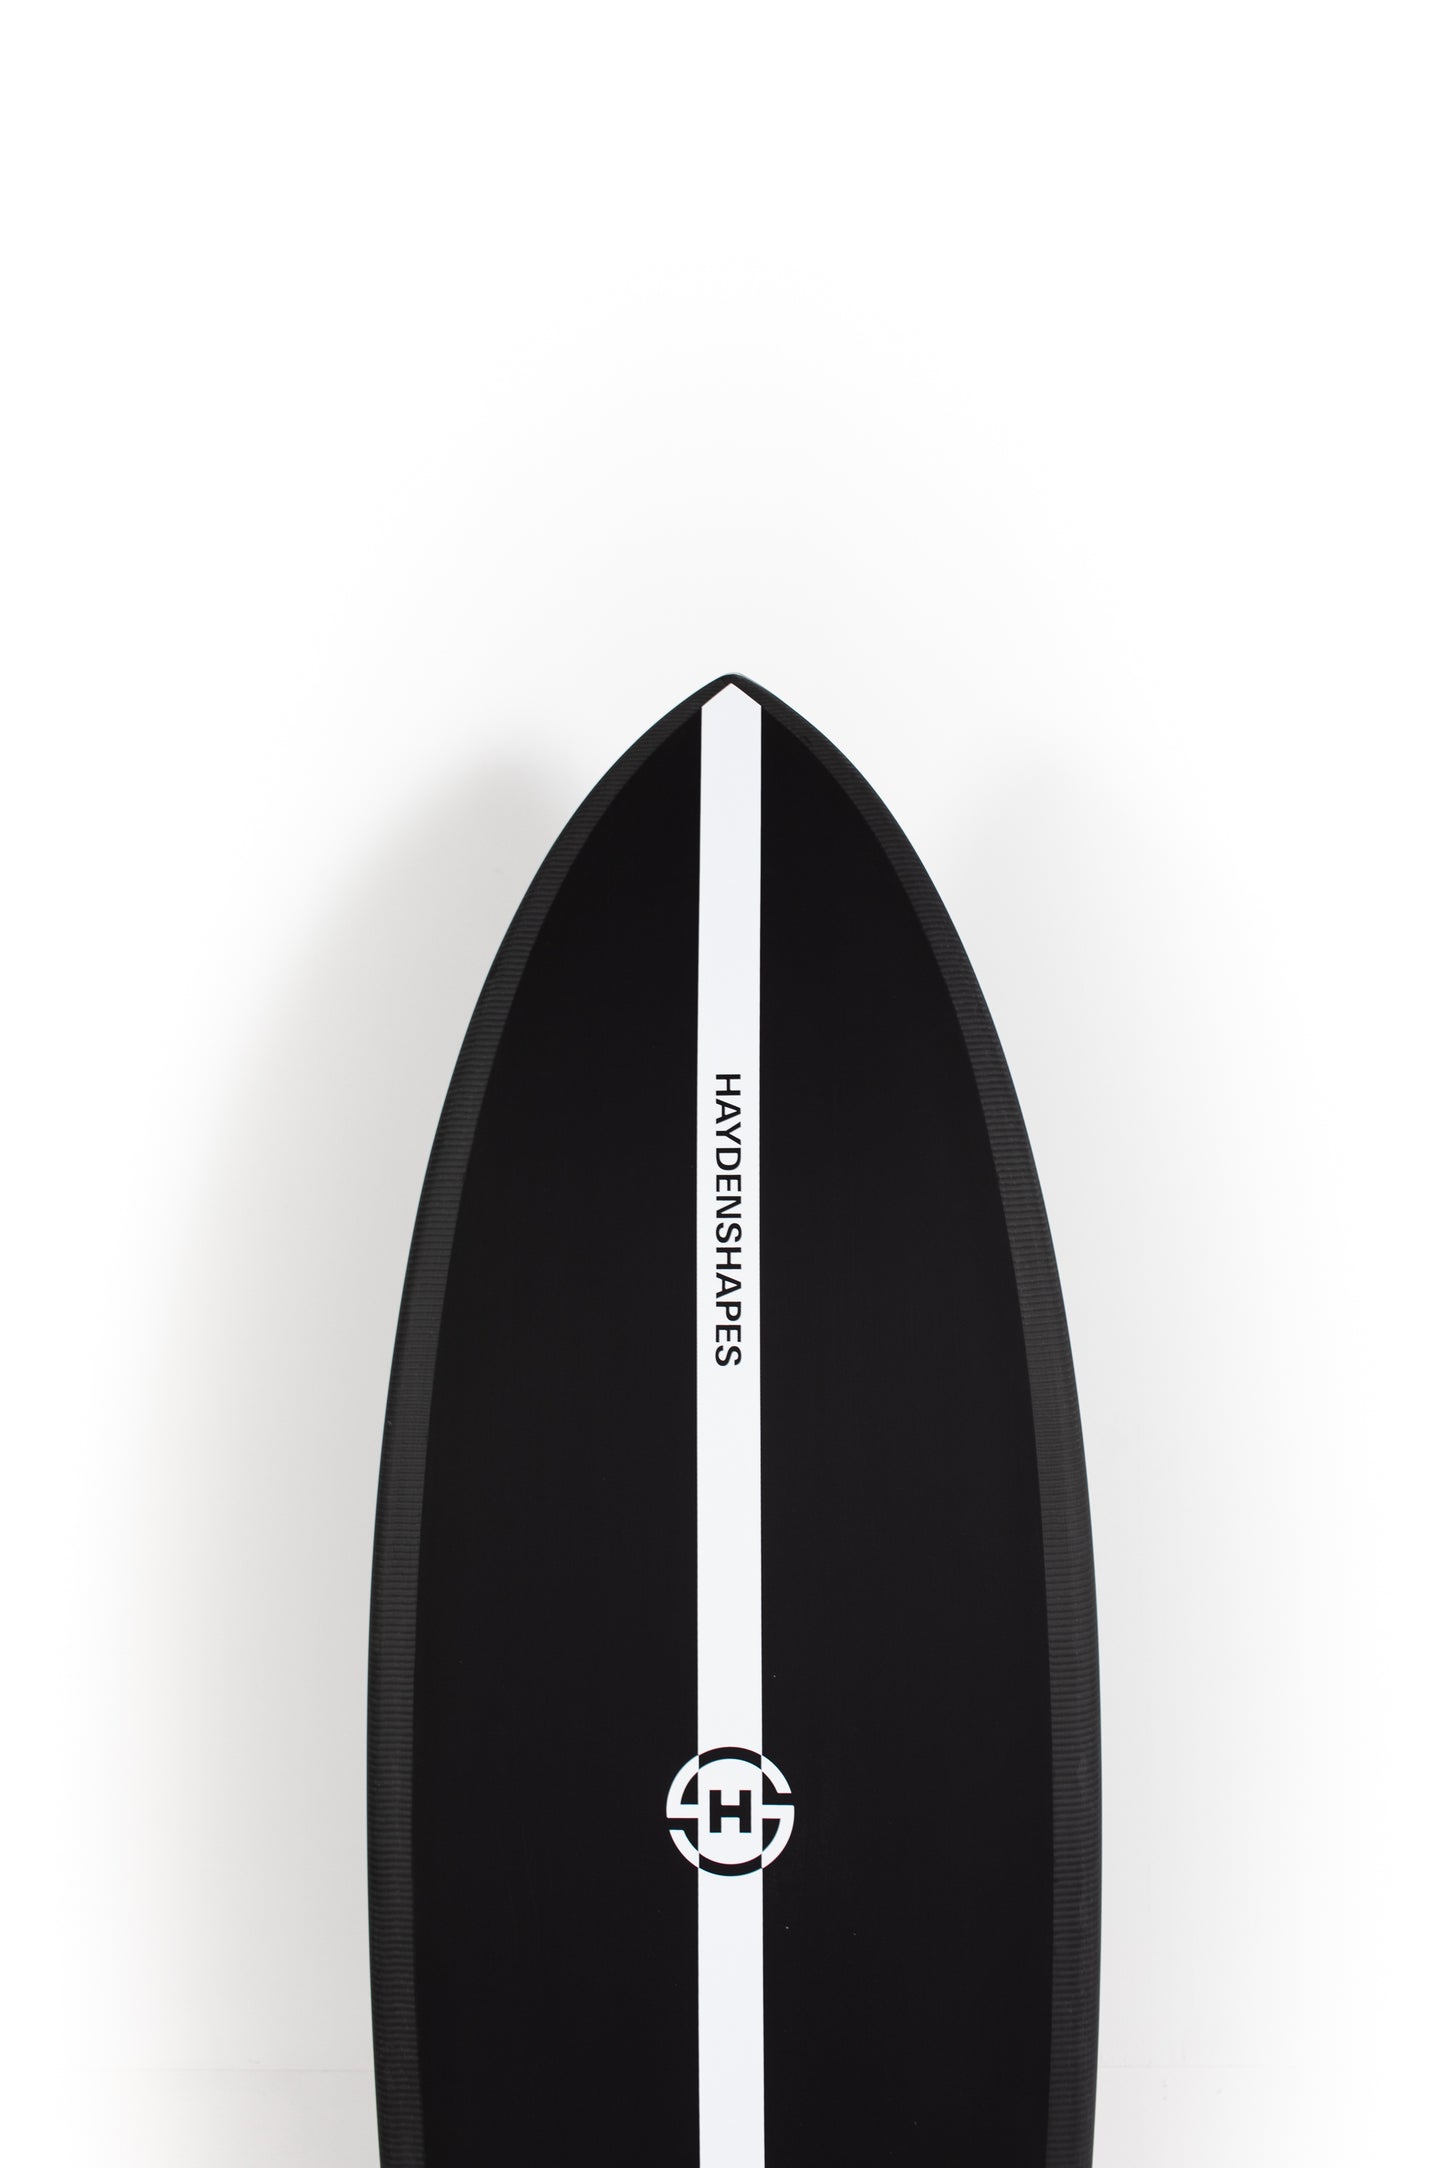 
                  
                    Pukas Surf Shop - HAYDEN SHAPES SURFBOARDS - HYPTO KRIPTO 5'9" x 20 1/8 x 2 9/16 - 32'3 - FFHK-PBI-FU3-509
                  
                